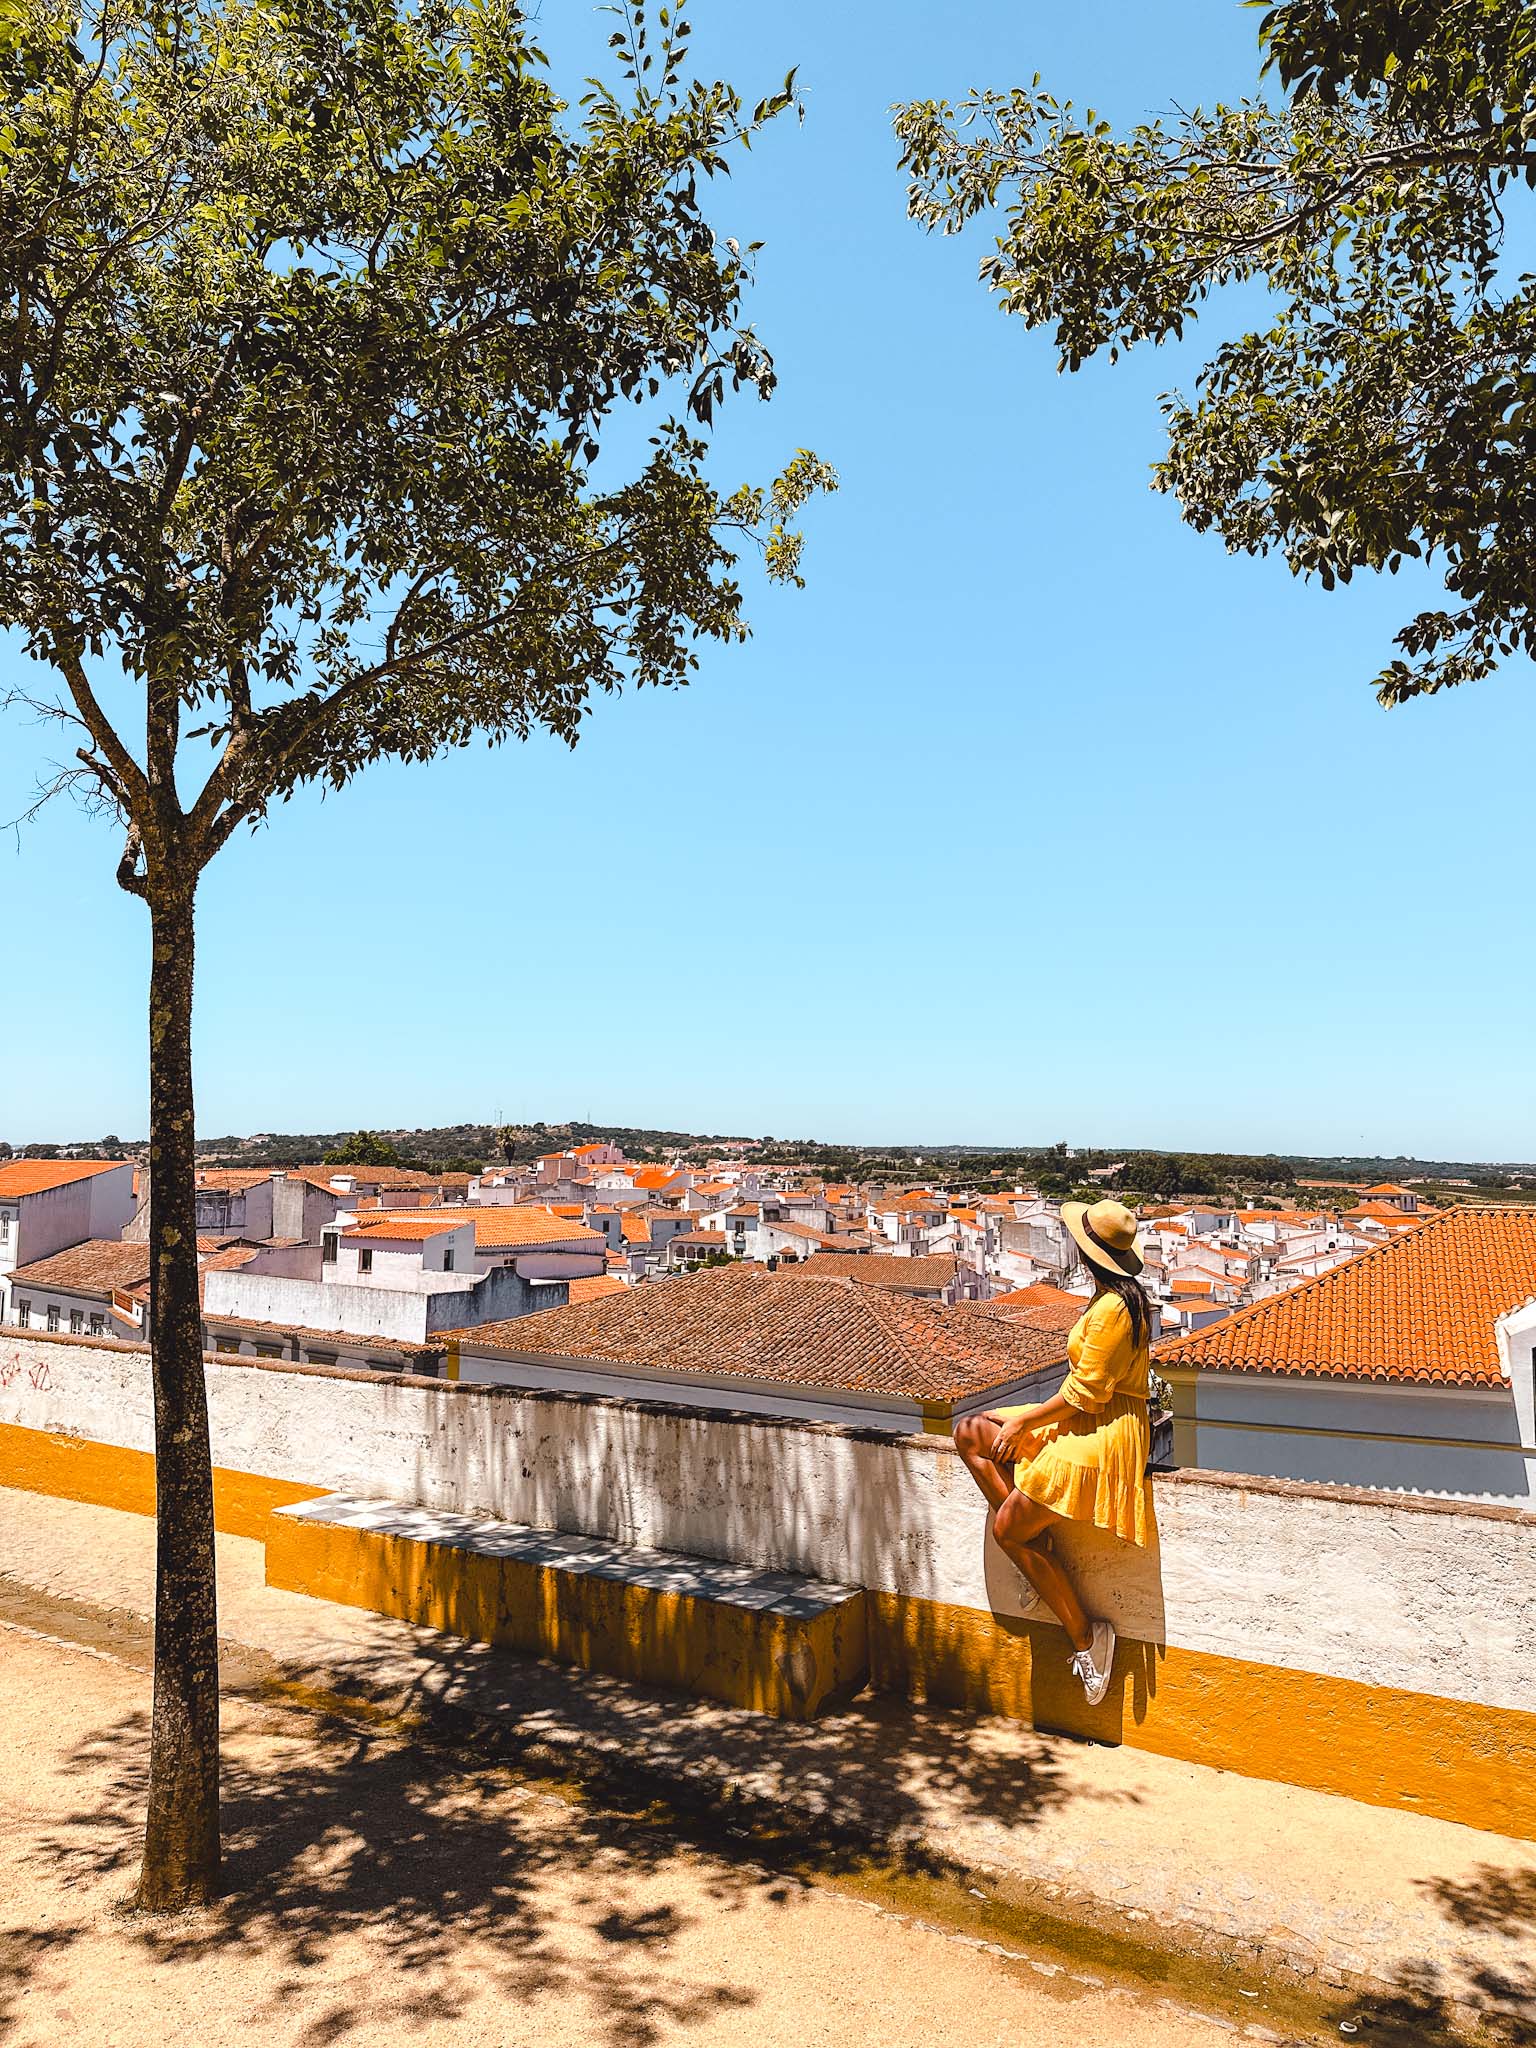 Evora, Portugal - best things to do - Jardim de Diana viewpoint